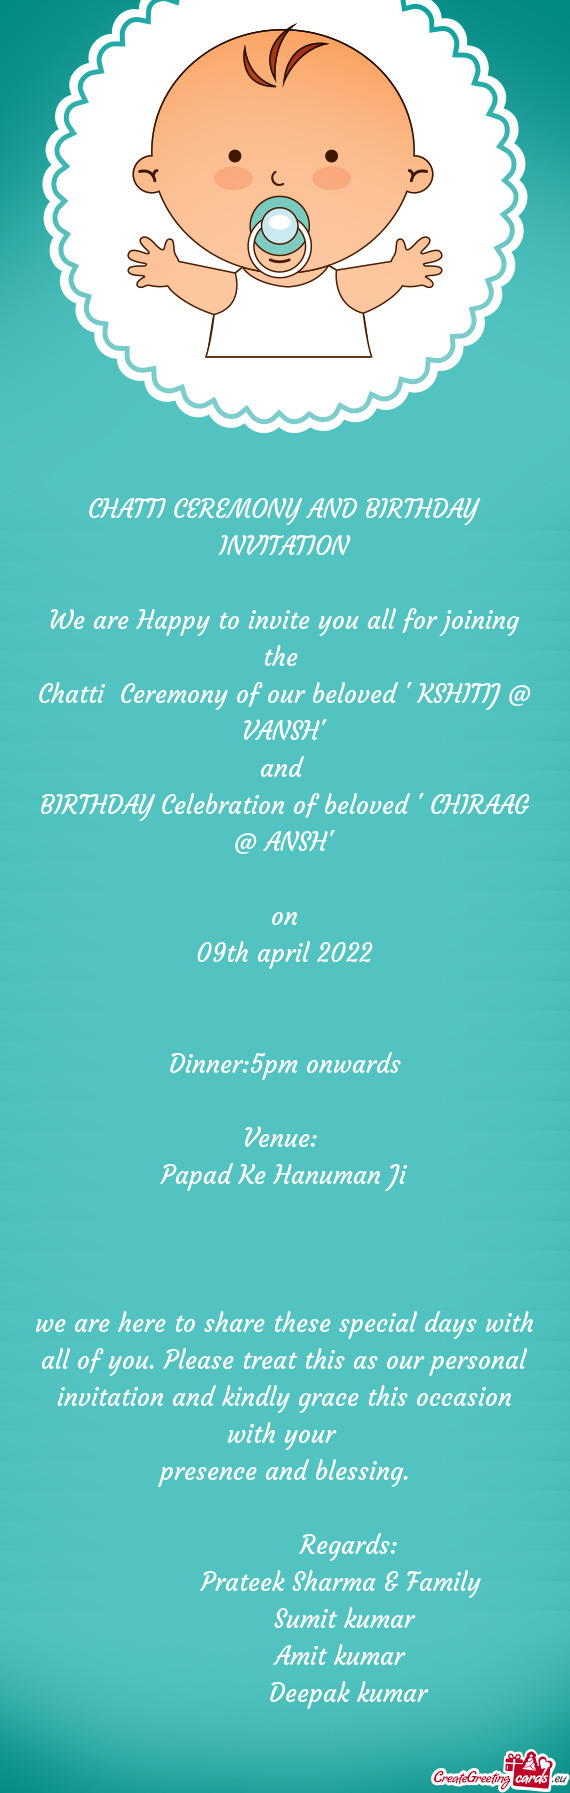 CHATTI CEREMONY AND BIRTHDAY INVITATION